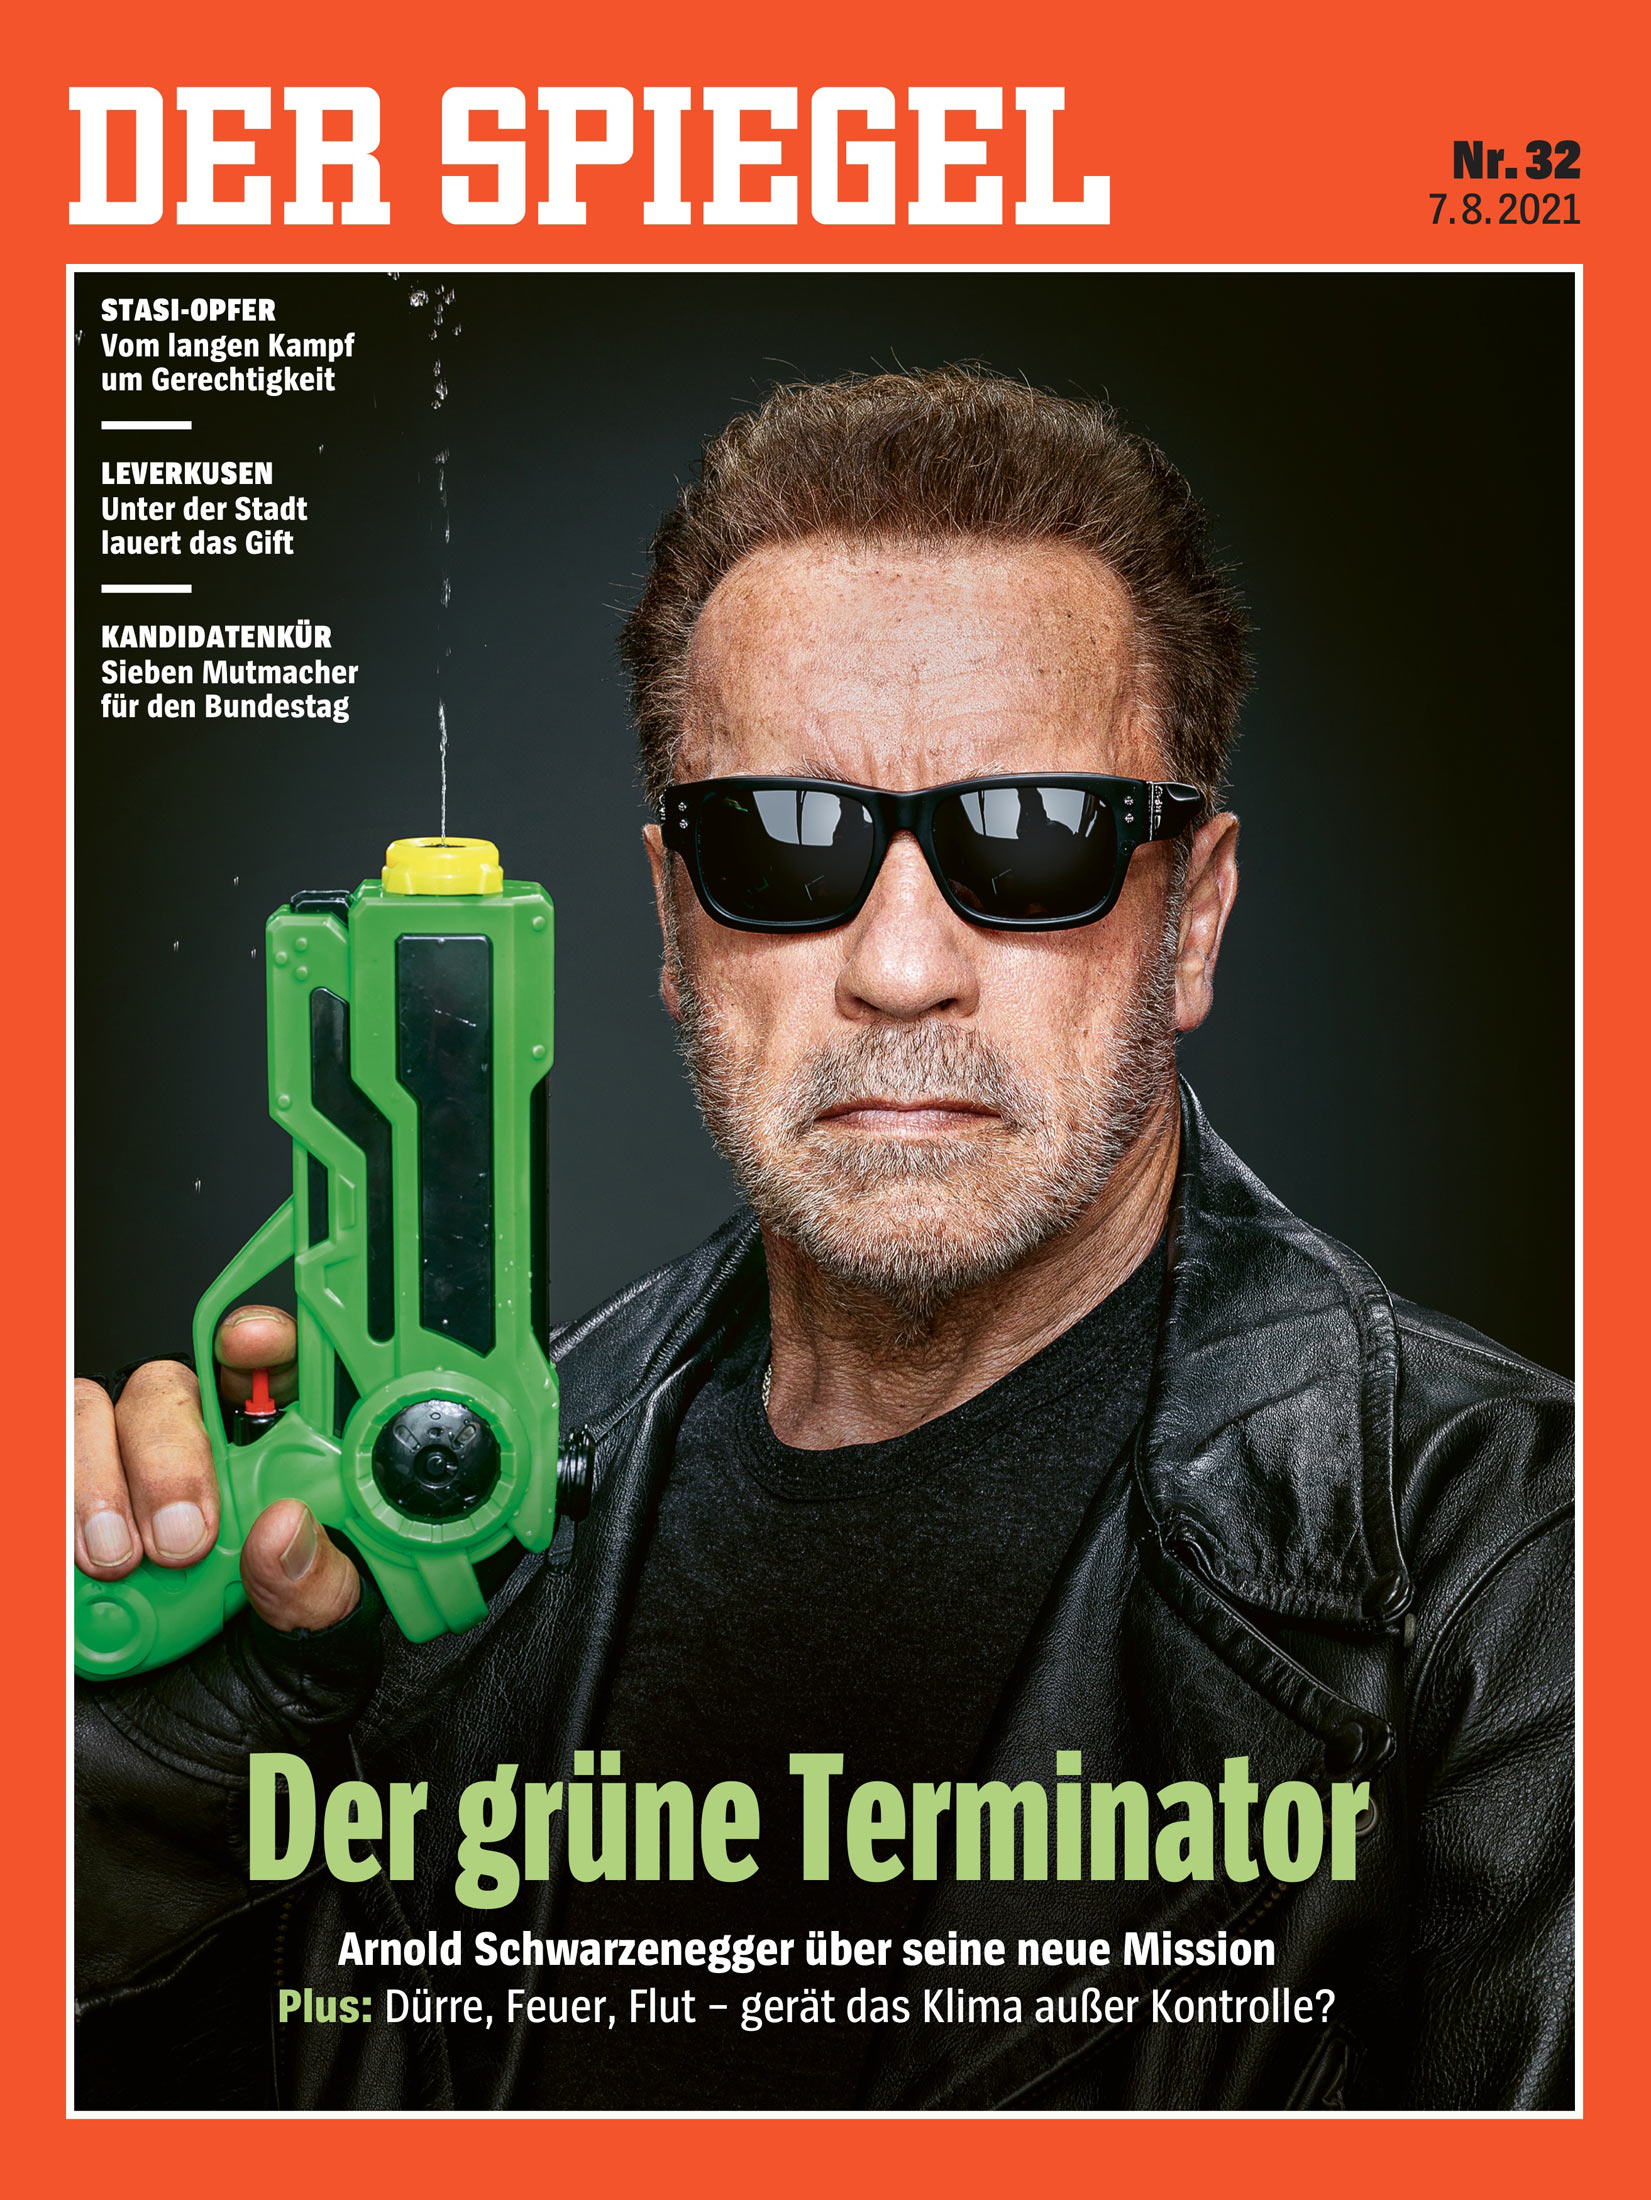 Schwarzenegger_Arnold_Spiegel_073021_COVER